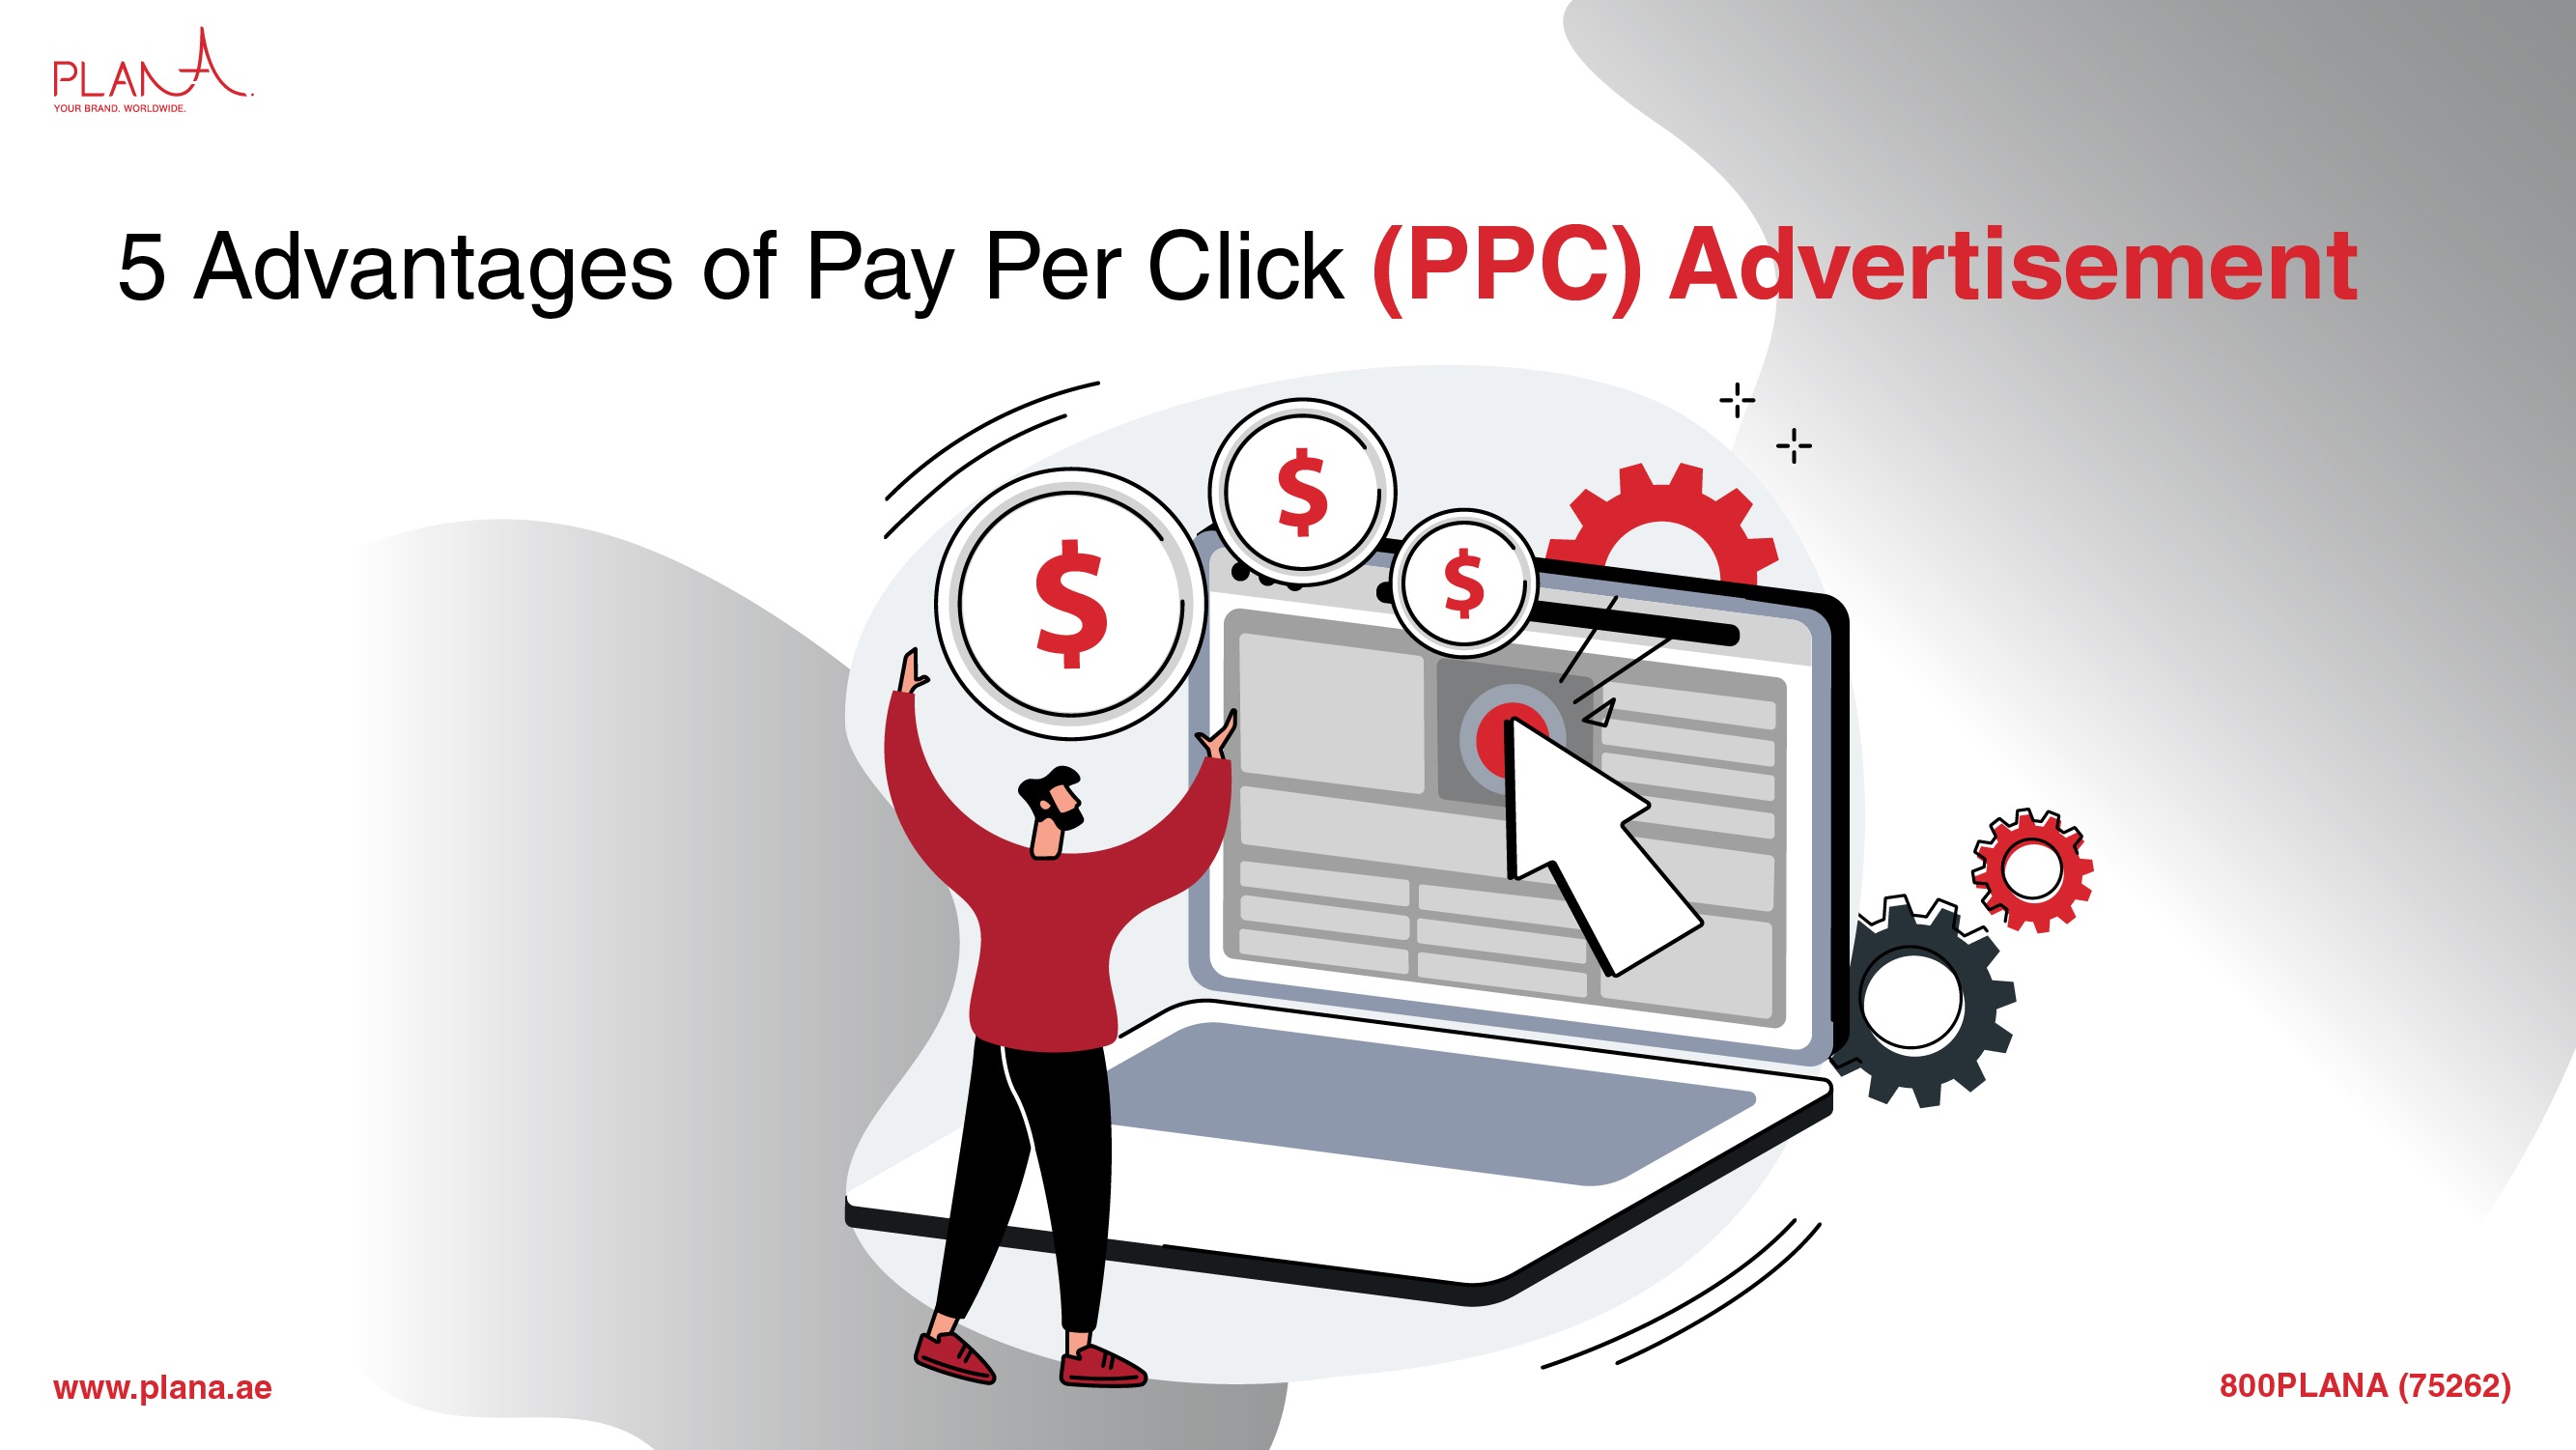 5 Advantages of Pay Per Click (PPC) Advertisement